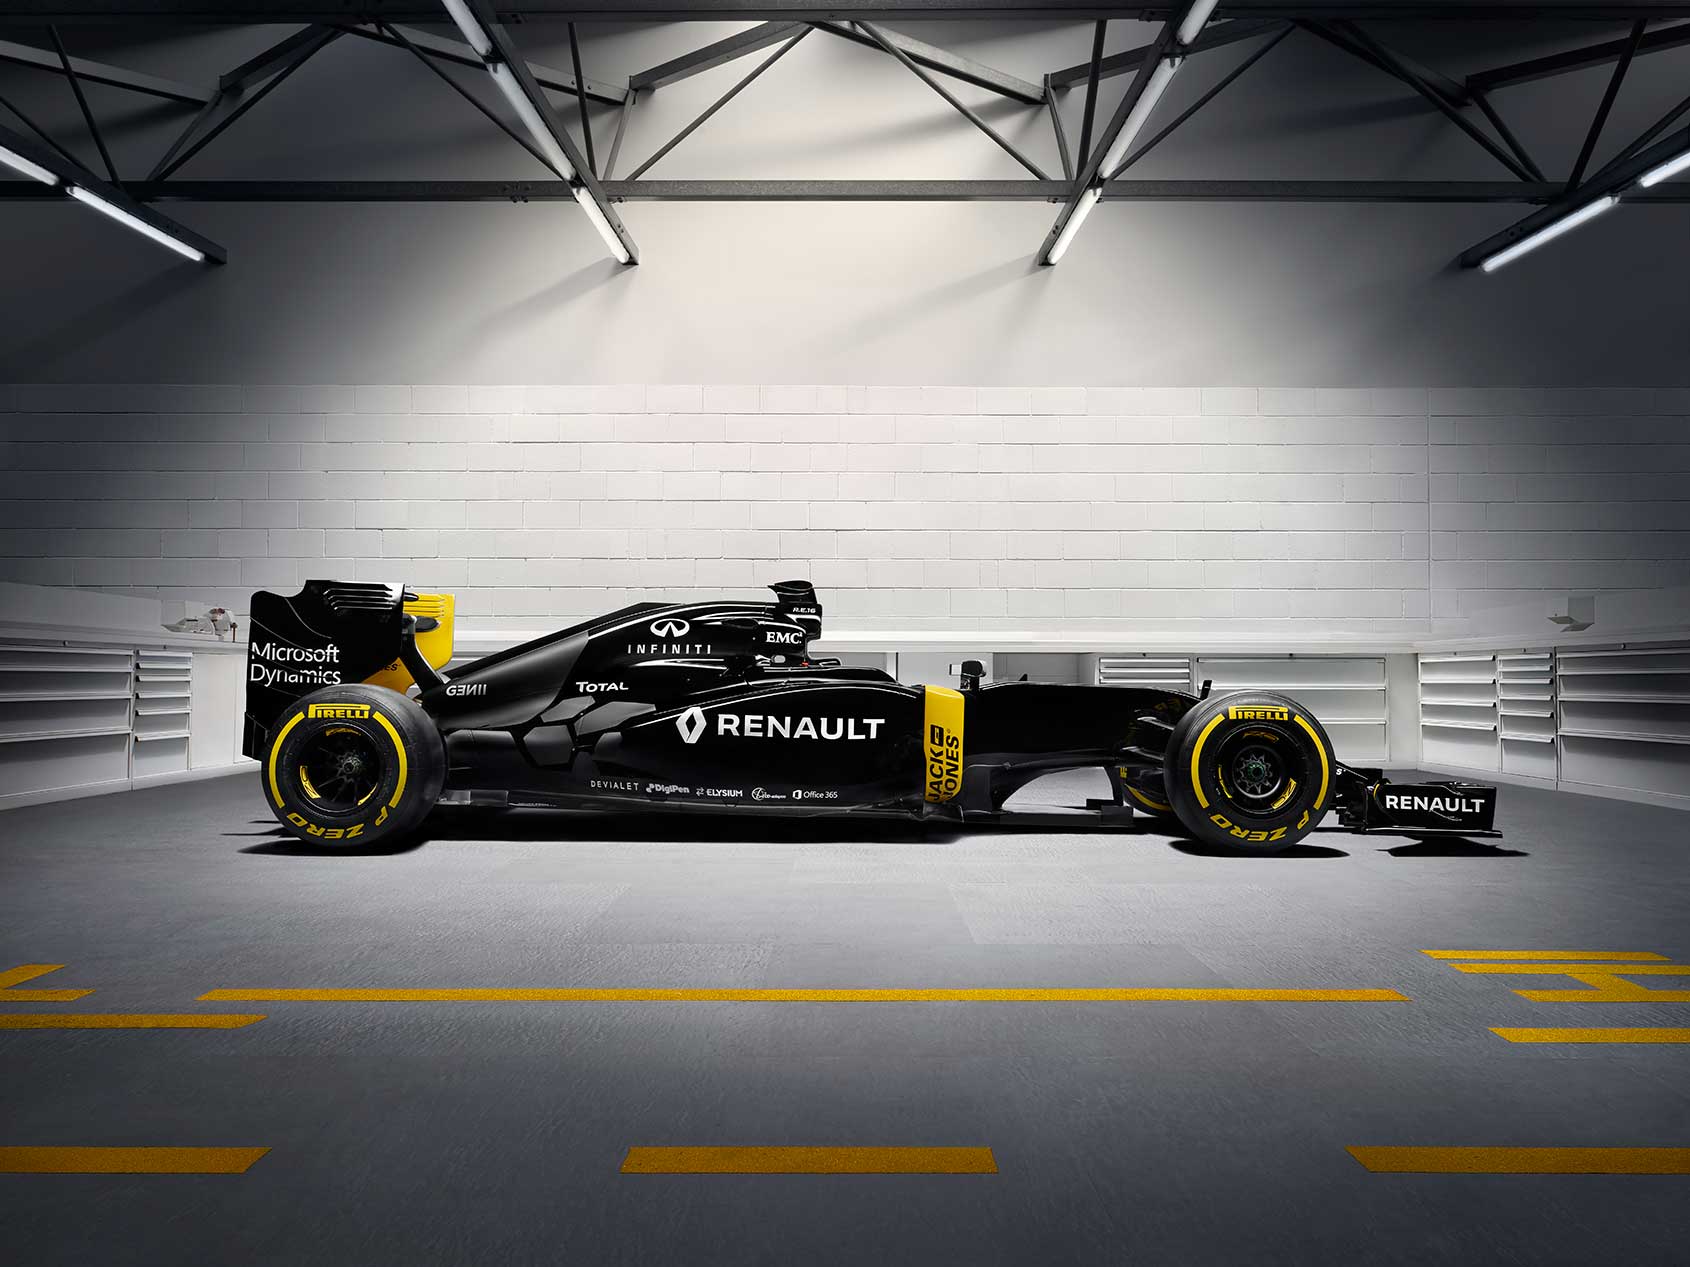 NEWS: Bell & Ross partner with Renault Sport Formula One Team